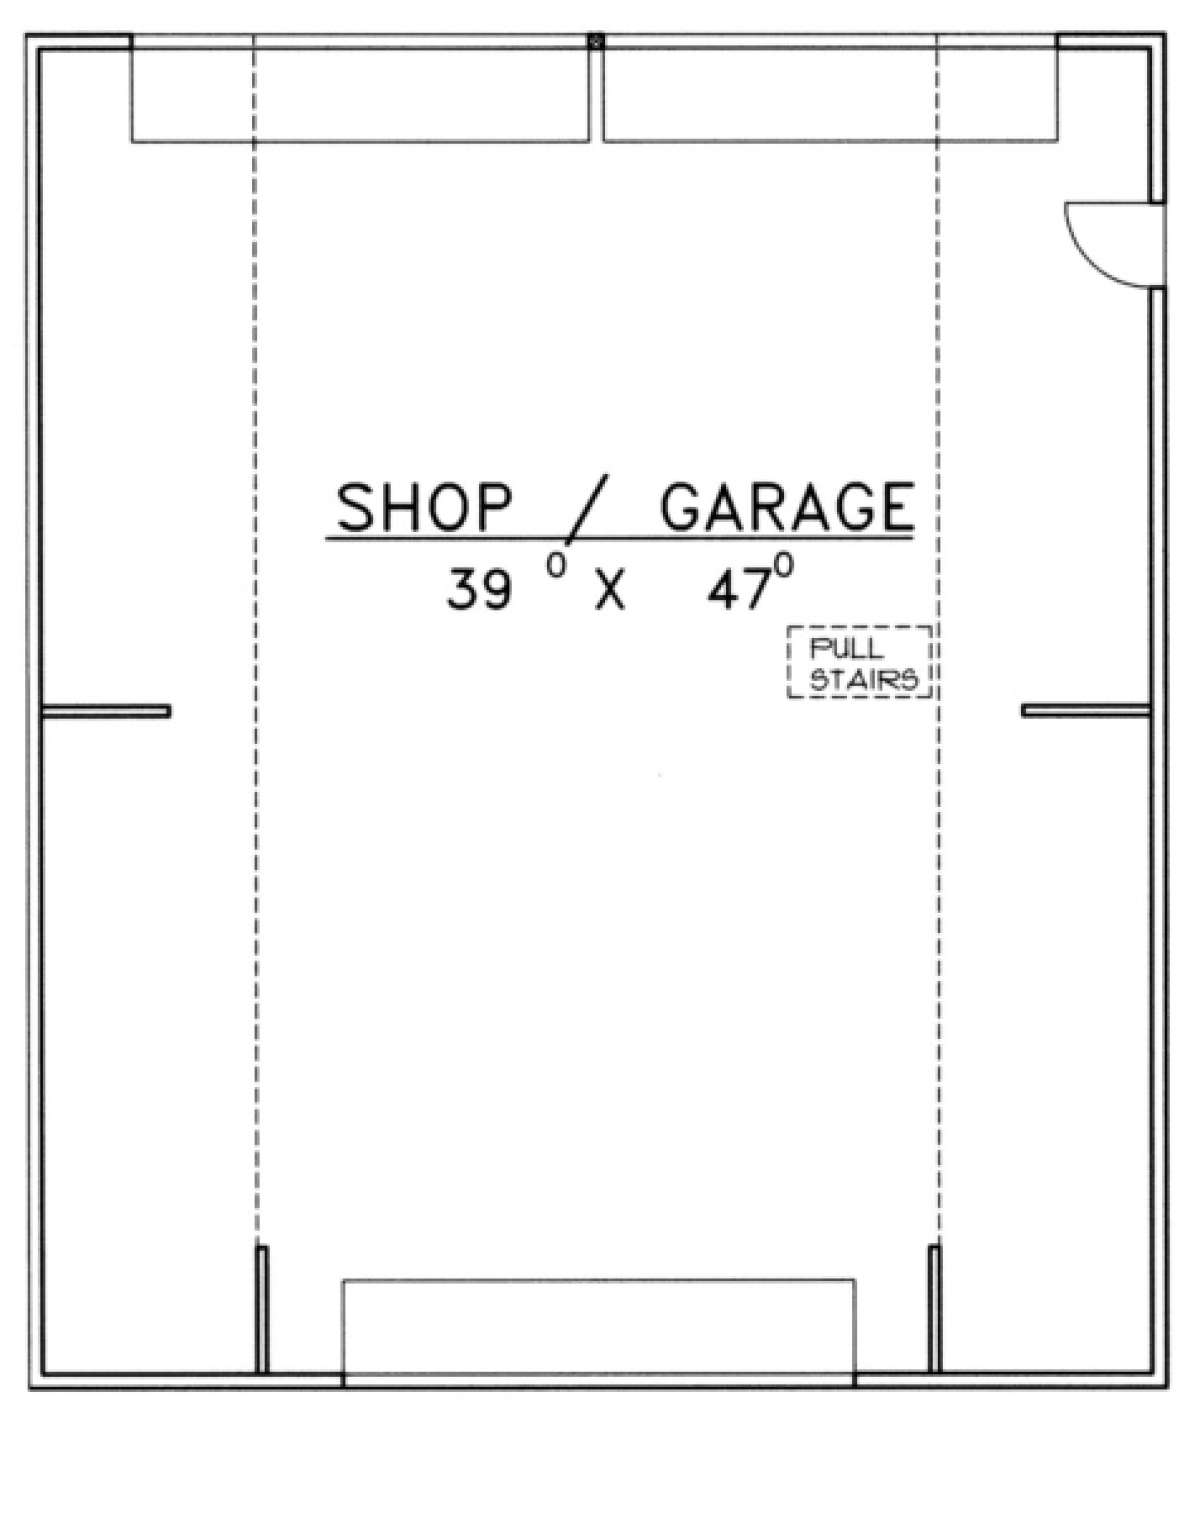 Garage/Shop Floor for House Plan #039-00410